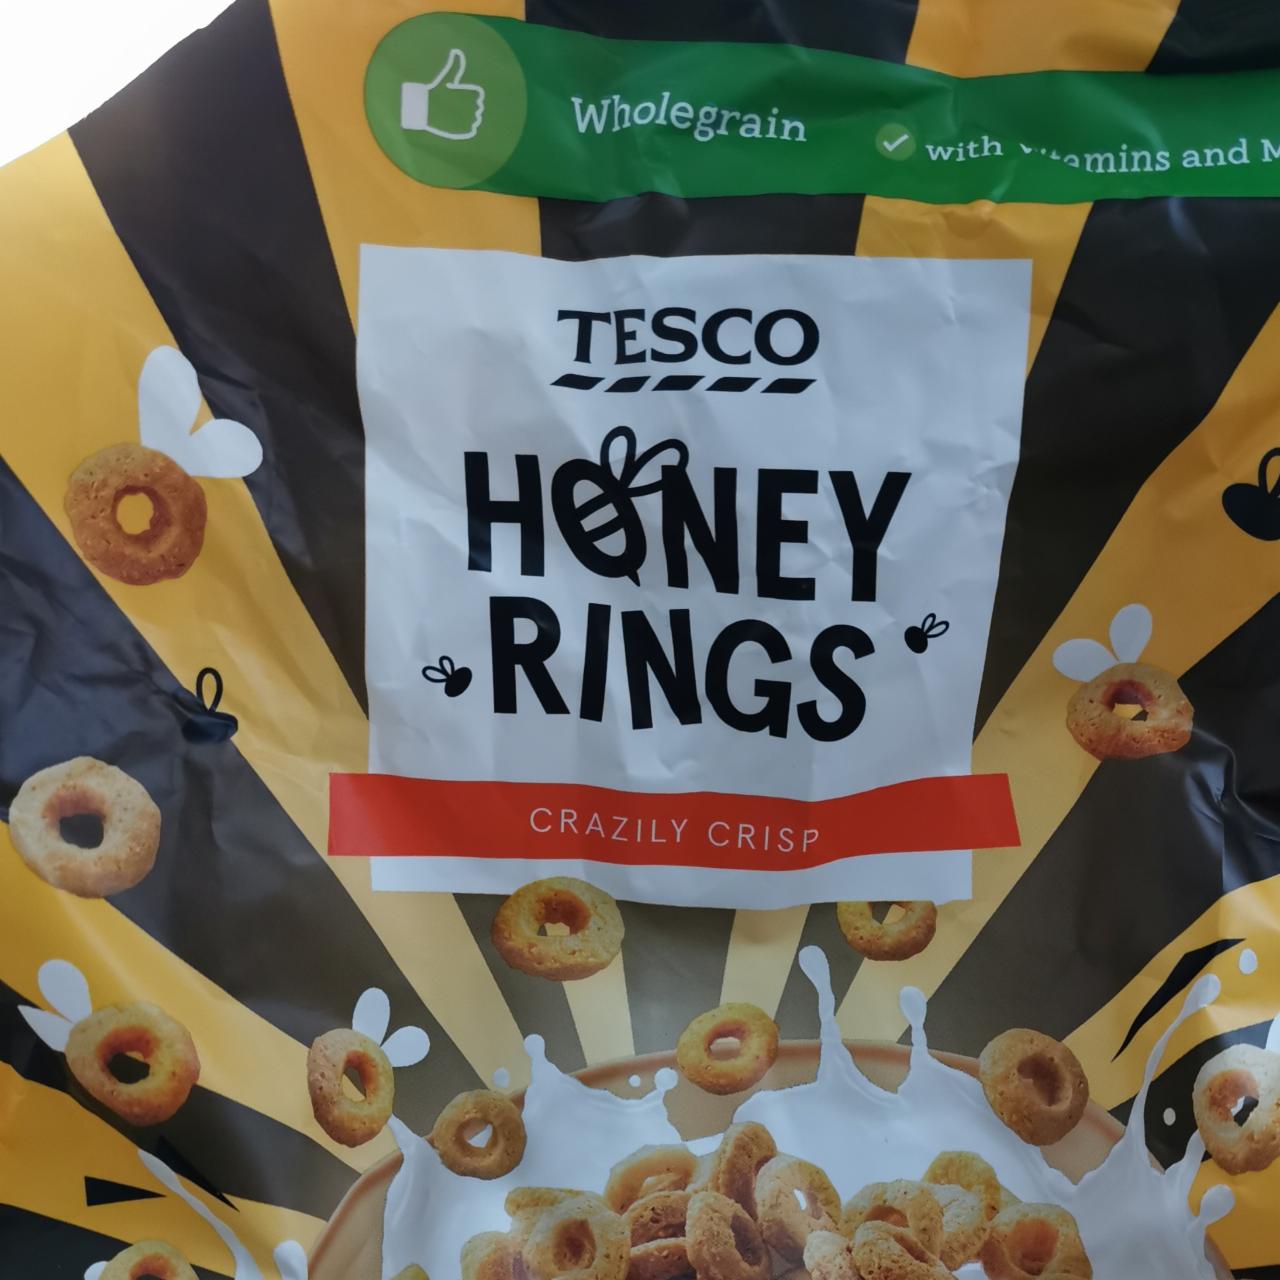 Képek - Honey Rings crazily crisp Tesco